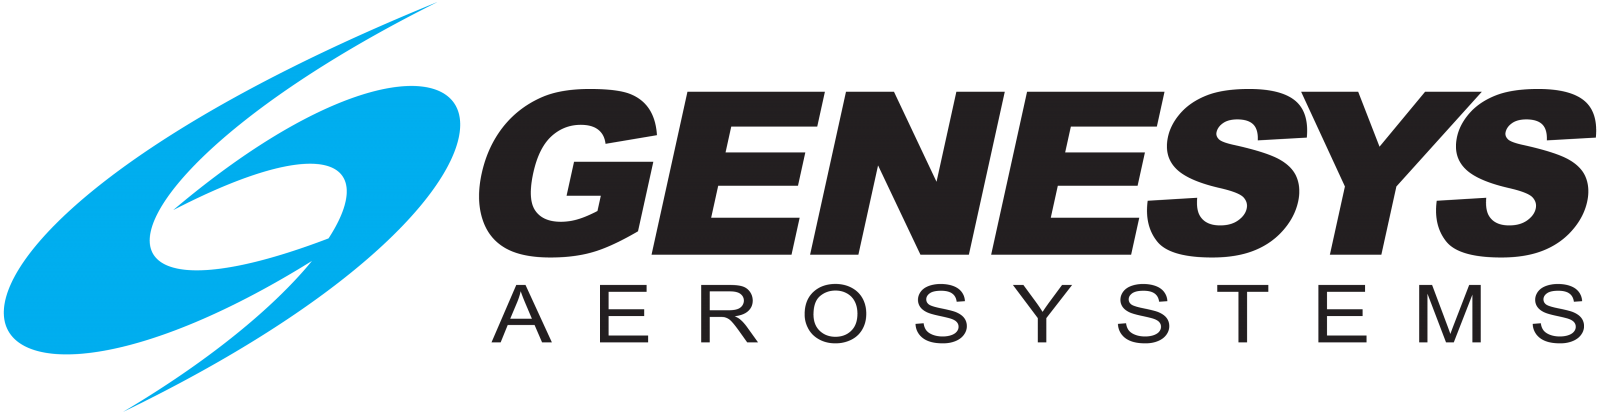 GenesysAerosystems_Logo